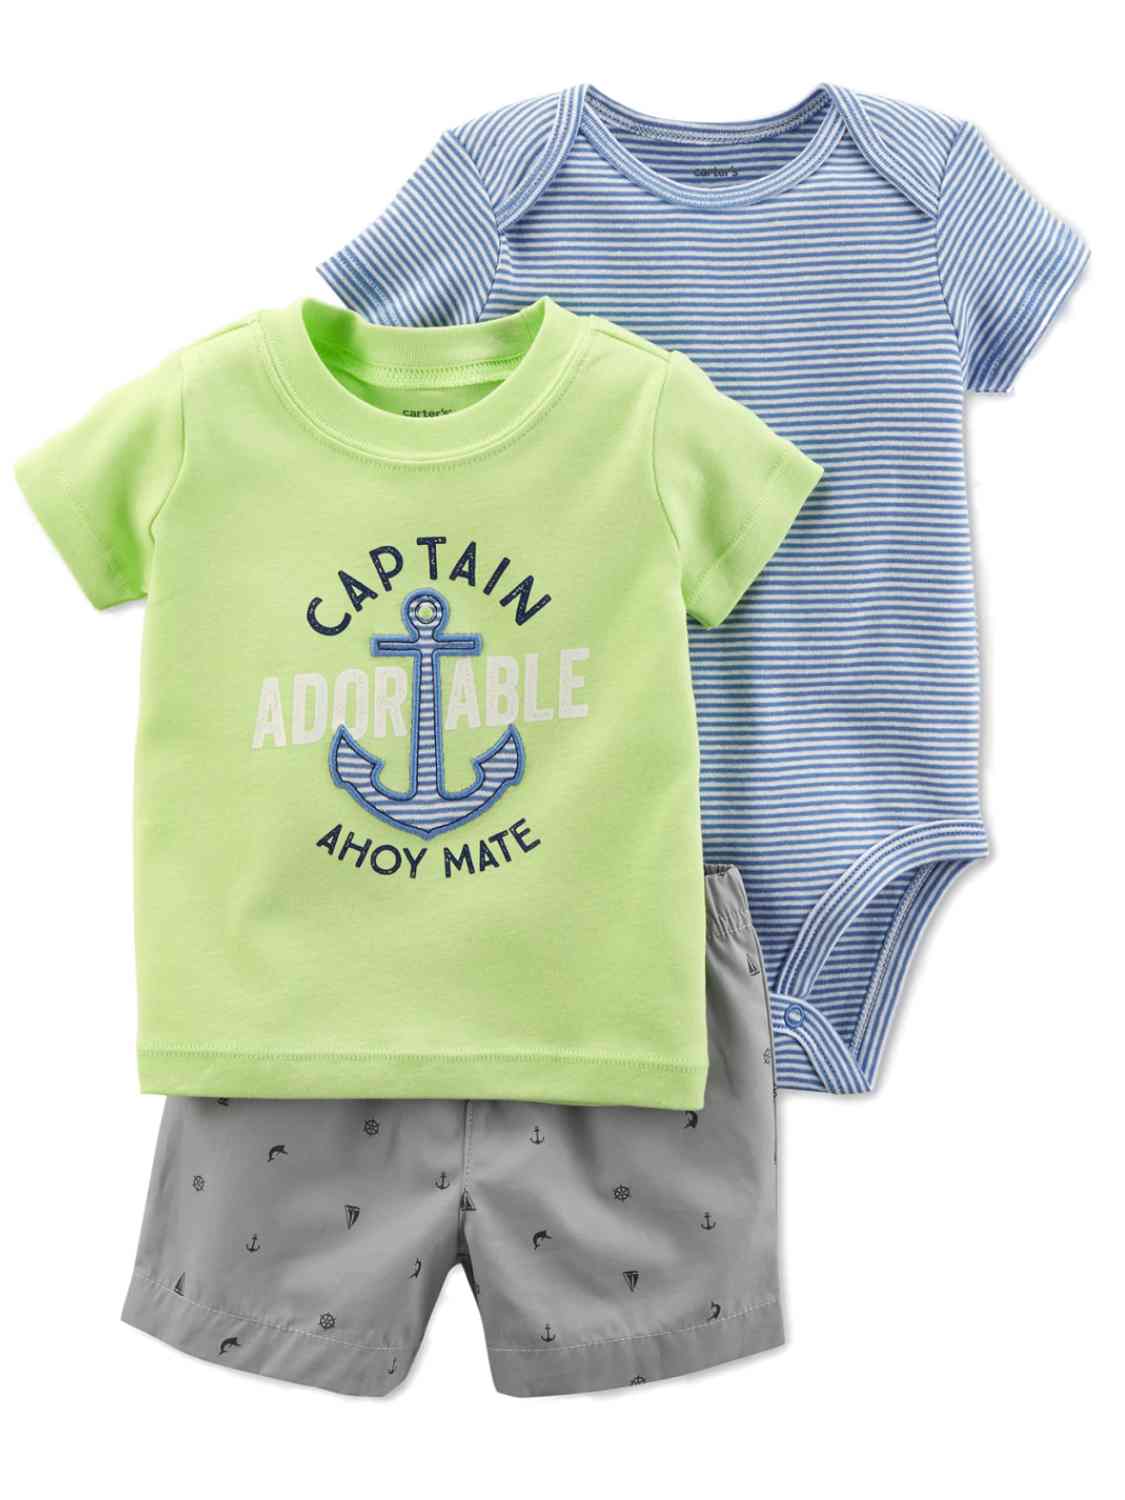 Carter's Carters Infant Boys Captain Adorable Anchor Baby Outfit Bodysuit Shirt Shorts NB